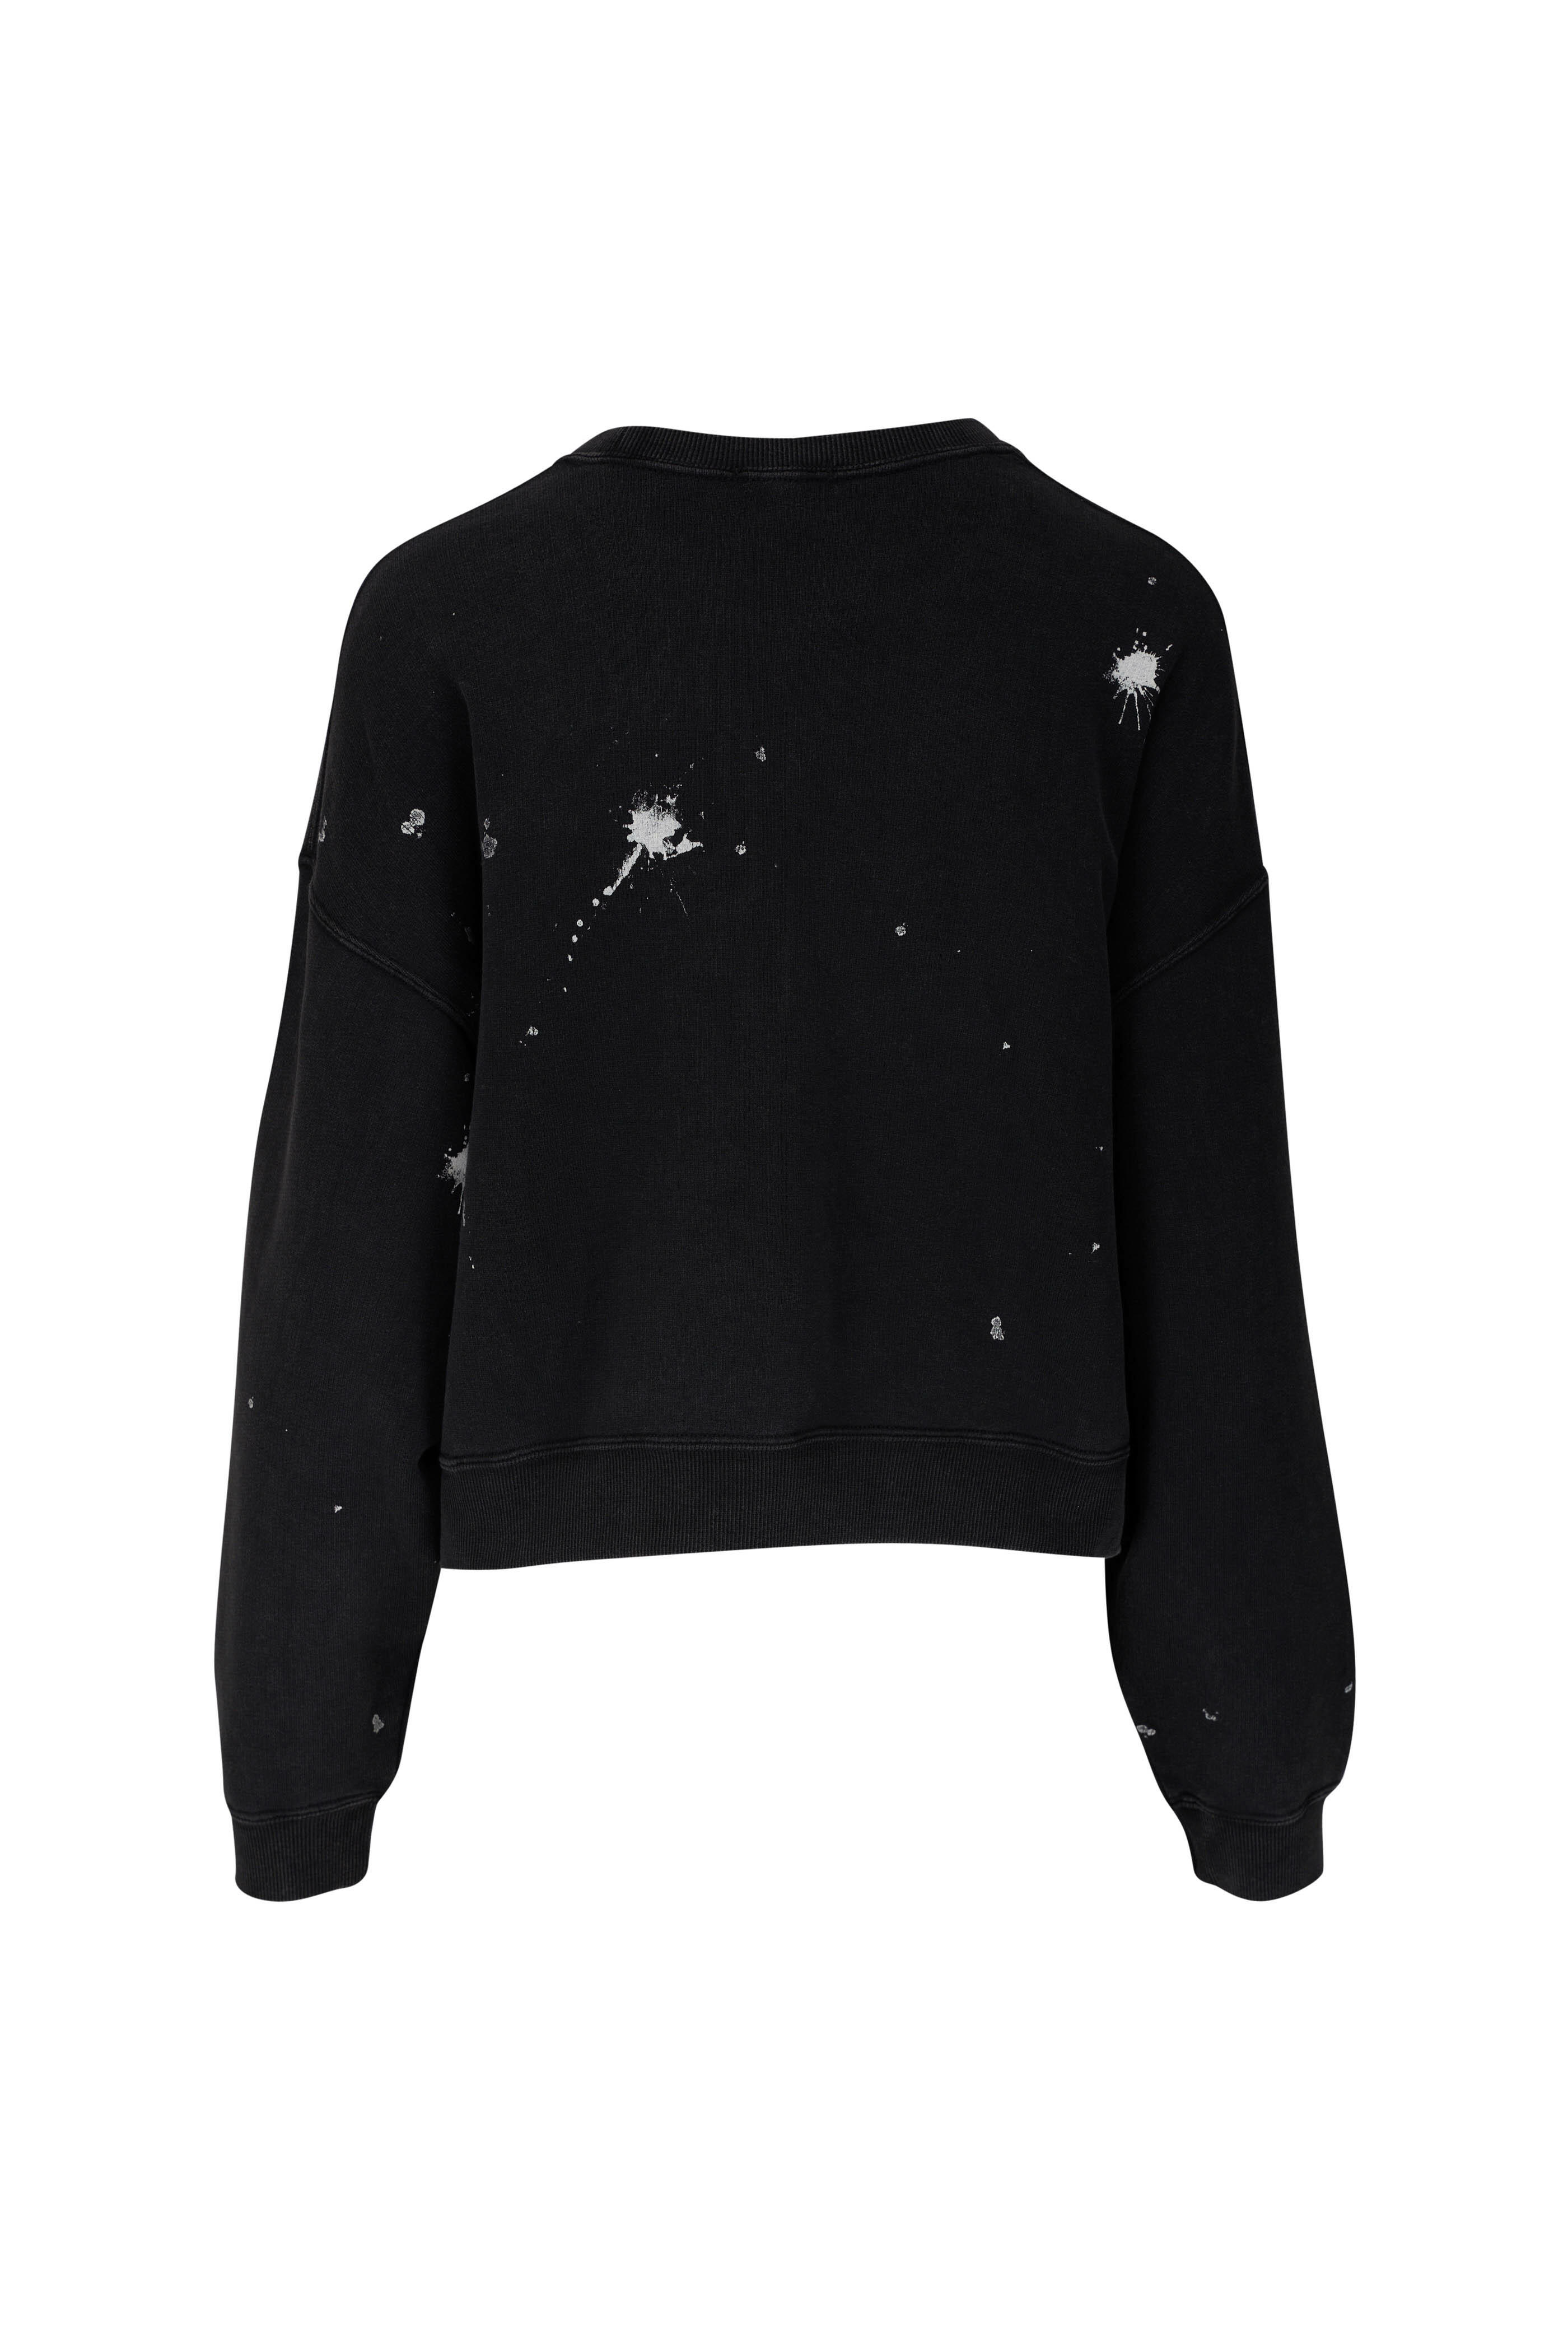 R13 - Cropped R13 Black Distressed Crewneck Sweatshirt